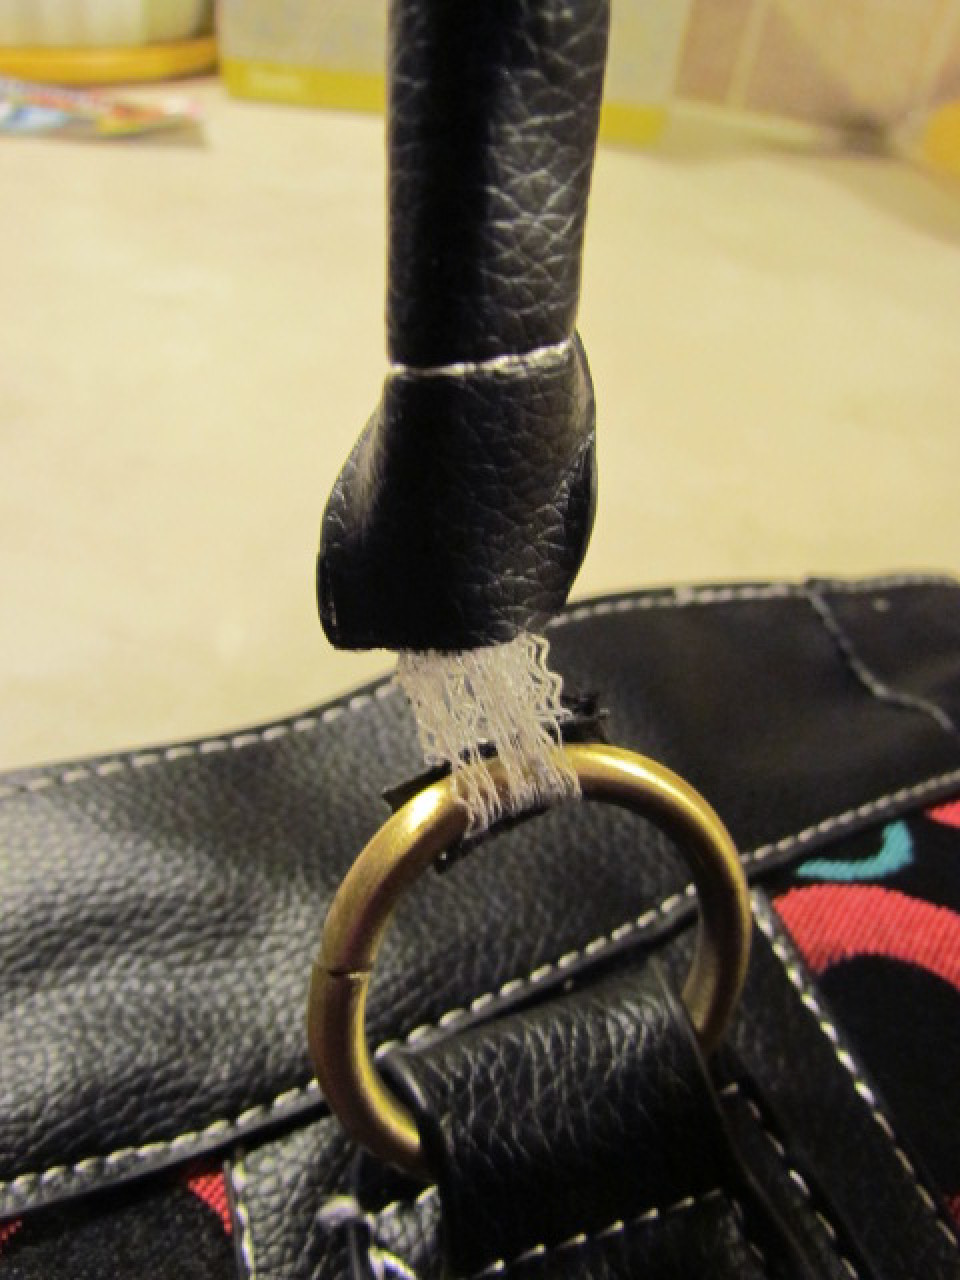 The Friday Fix (Episode 7) - Repair a broken handbag strap 